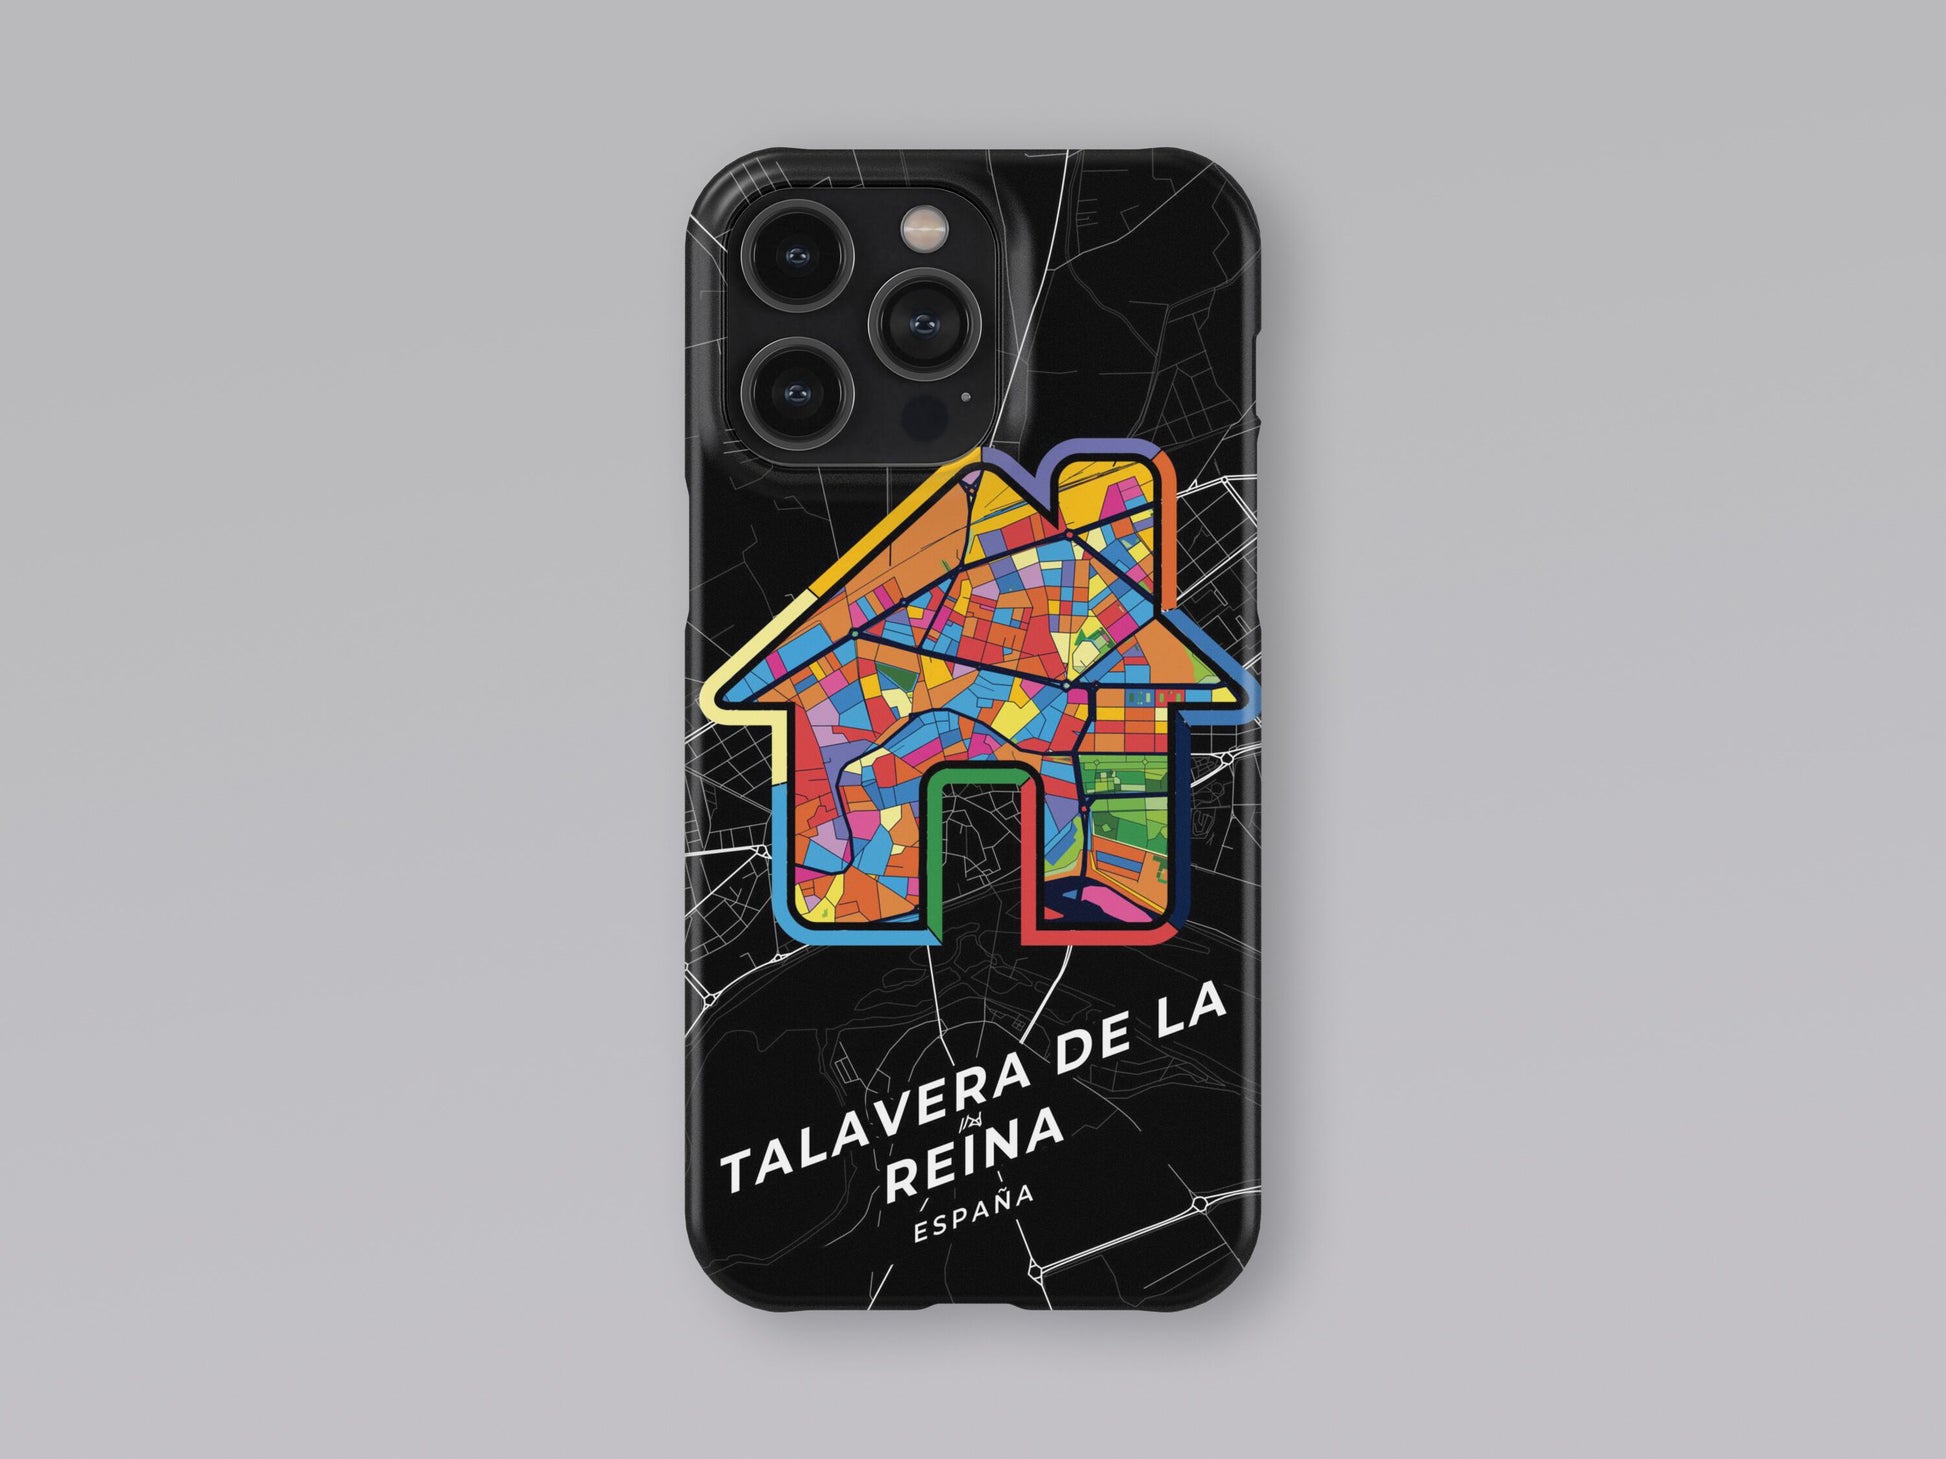 Talavera De La Reina Spain slim phone case with colorful icon 3